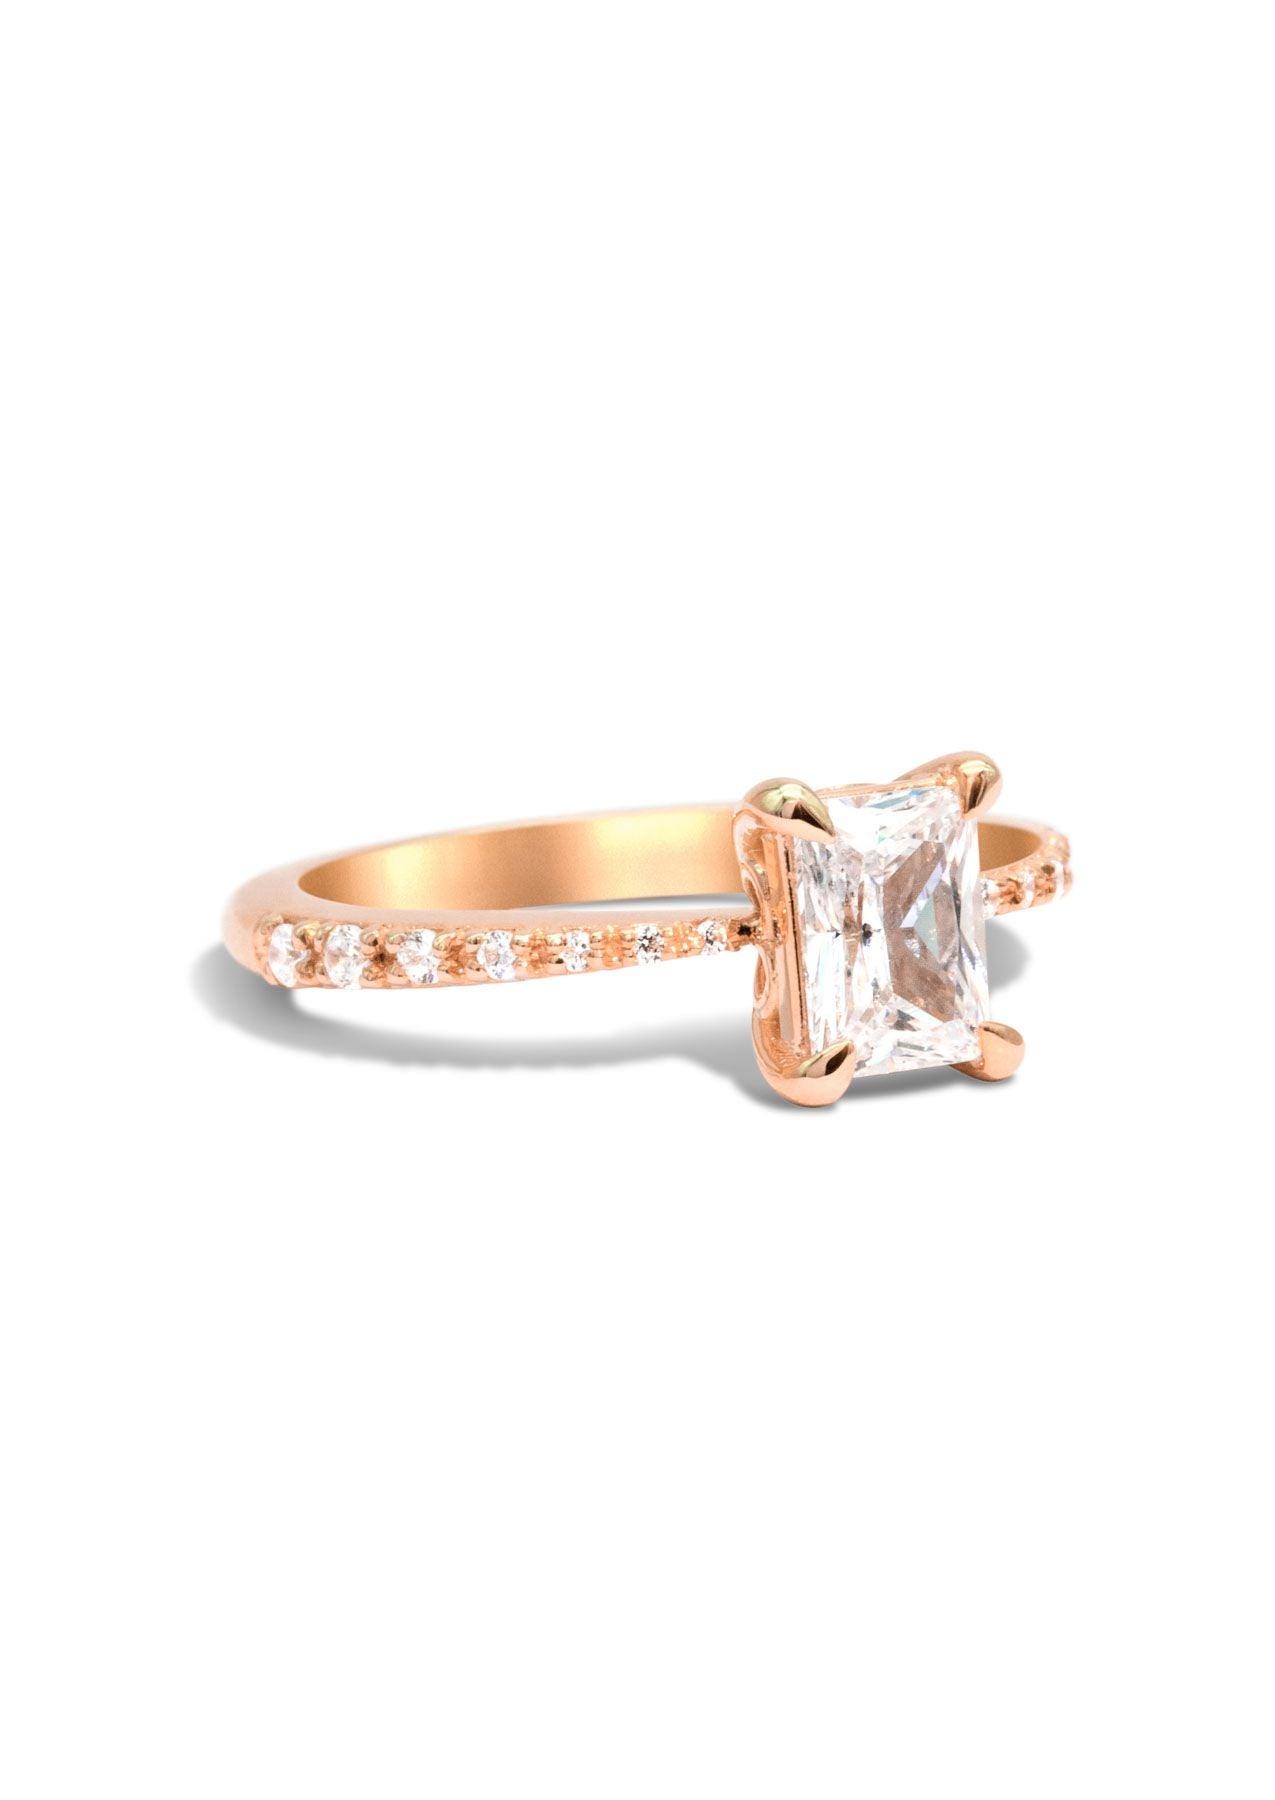 The Celine Rose Gold Cultured Diamond Ring